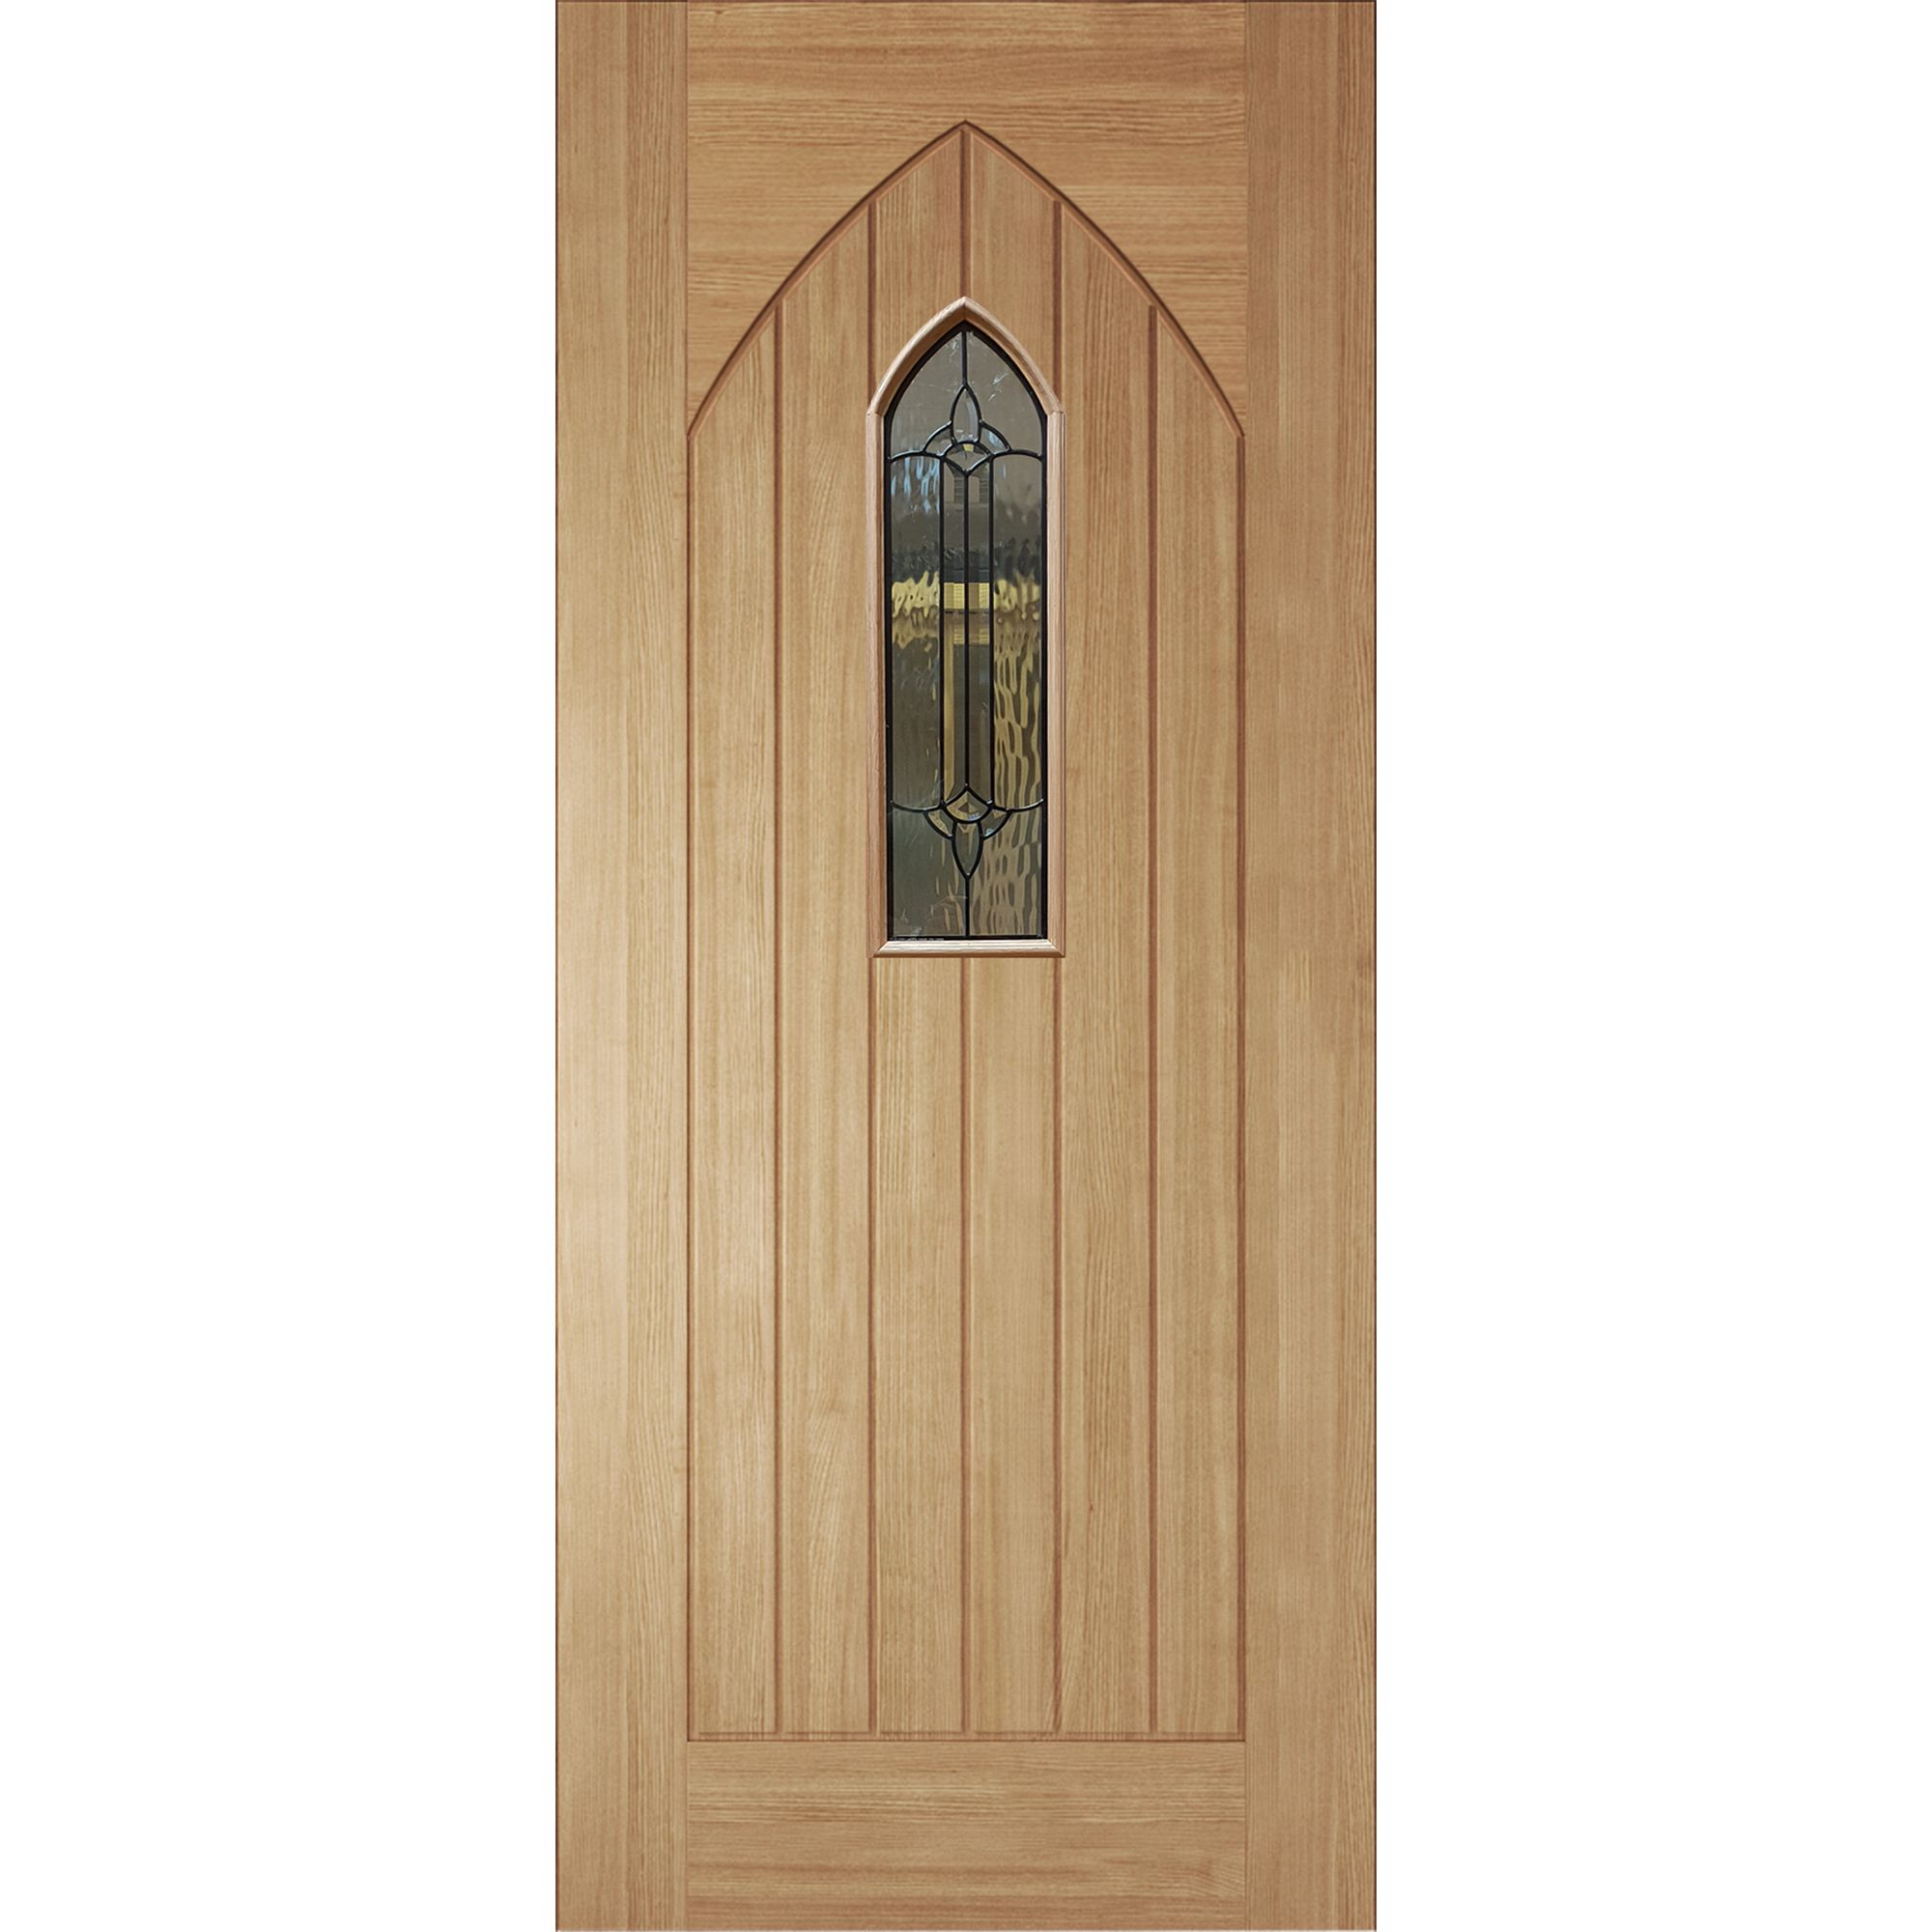 Westminster 6 panel Leaded Timber White oak veneer Swinging External Front Door, (H)1981mm (W)838mm